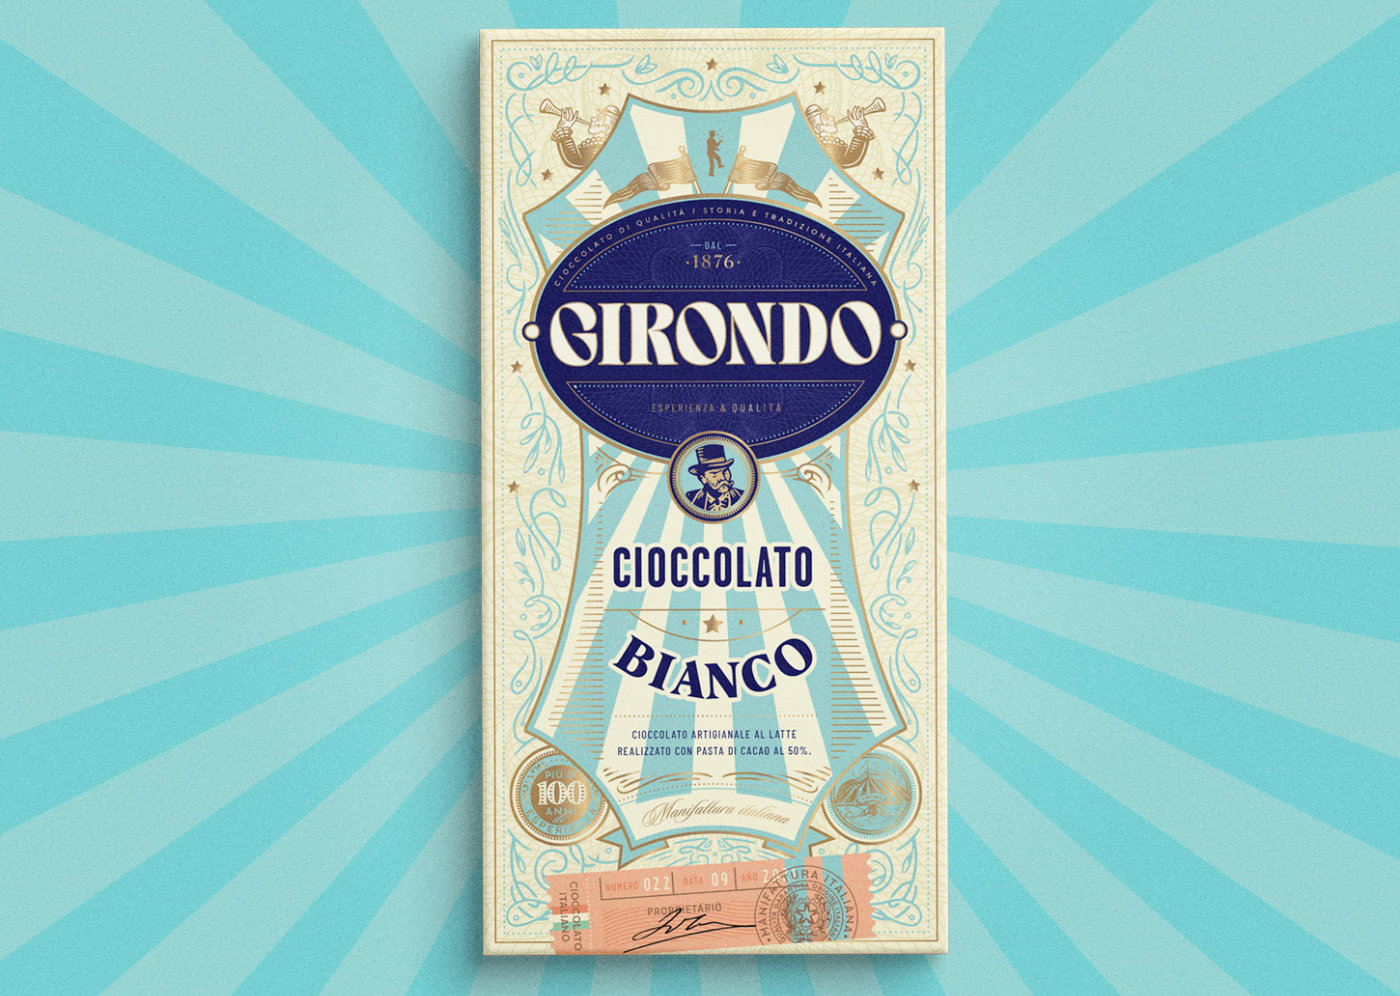 Girondo巧克力包装设计